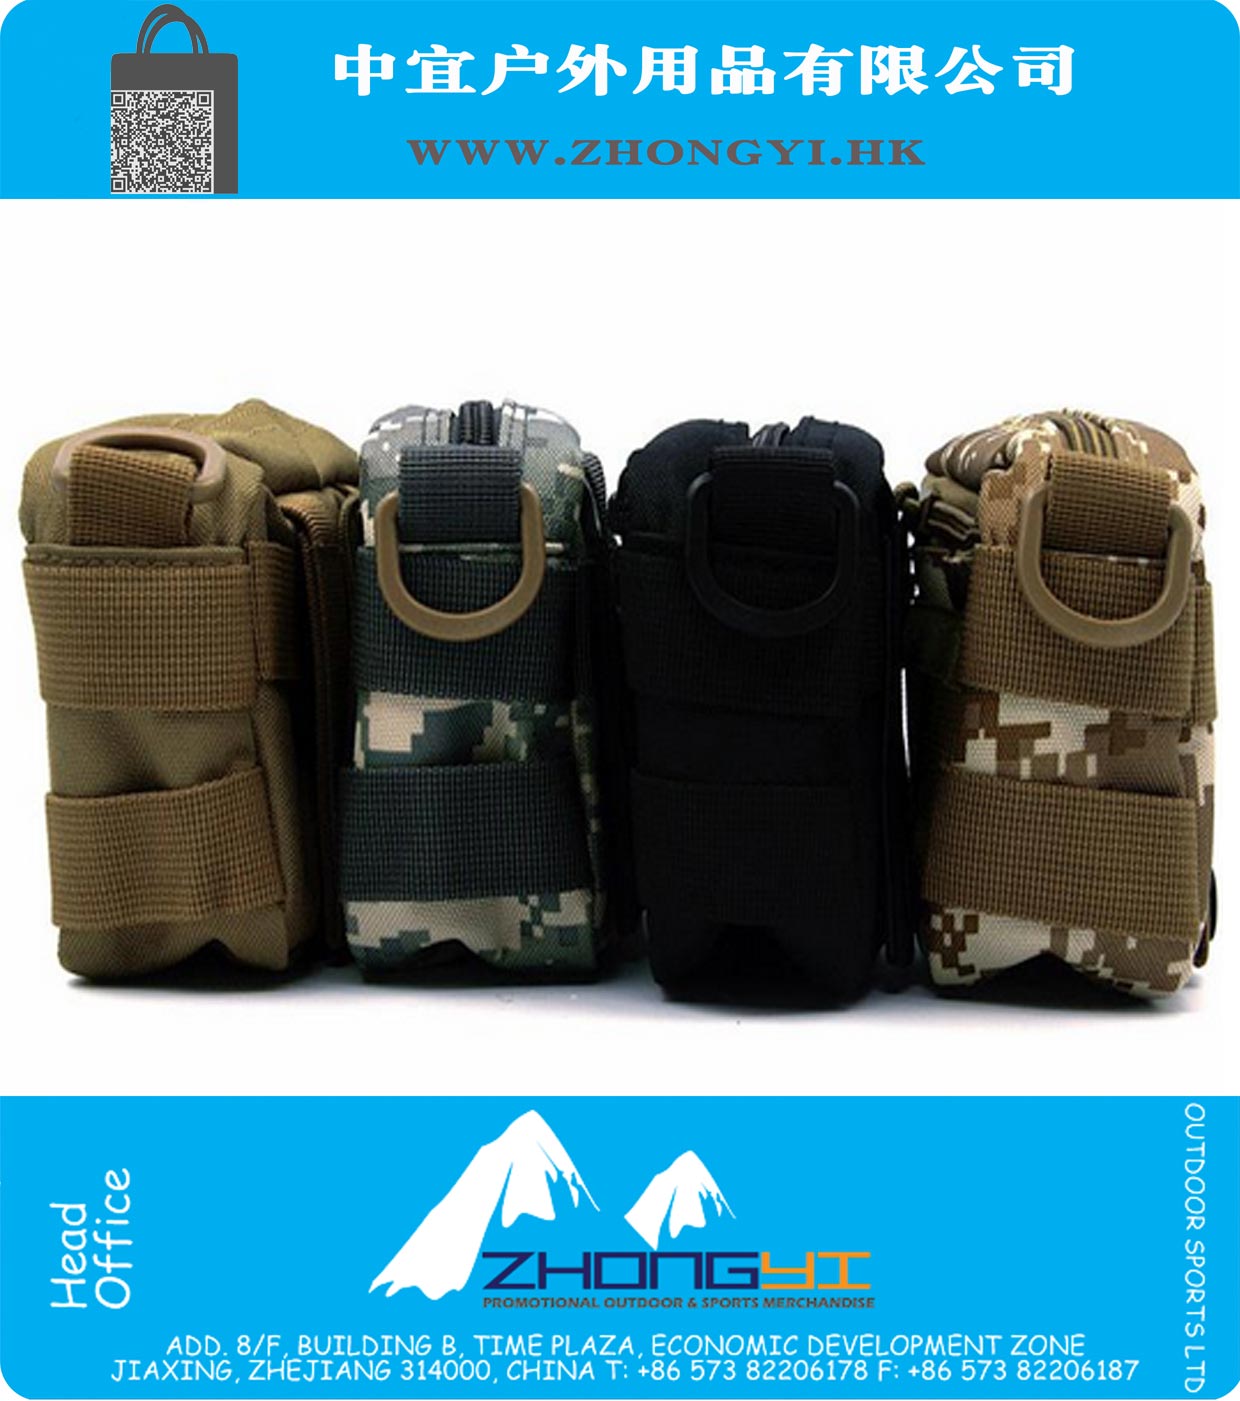 Molle Tactical Storage Bag Cross Body Messenger Tote Bag Shoulder Satchel Army Gear Leisure Flap Handy Pouch